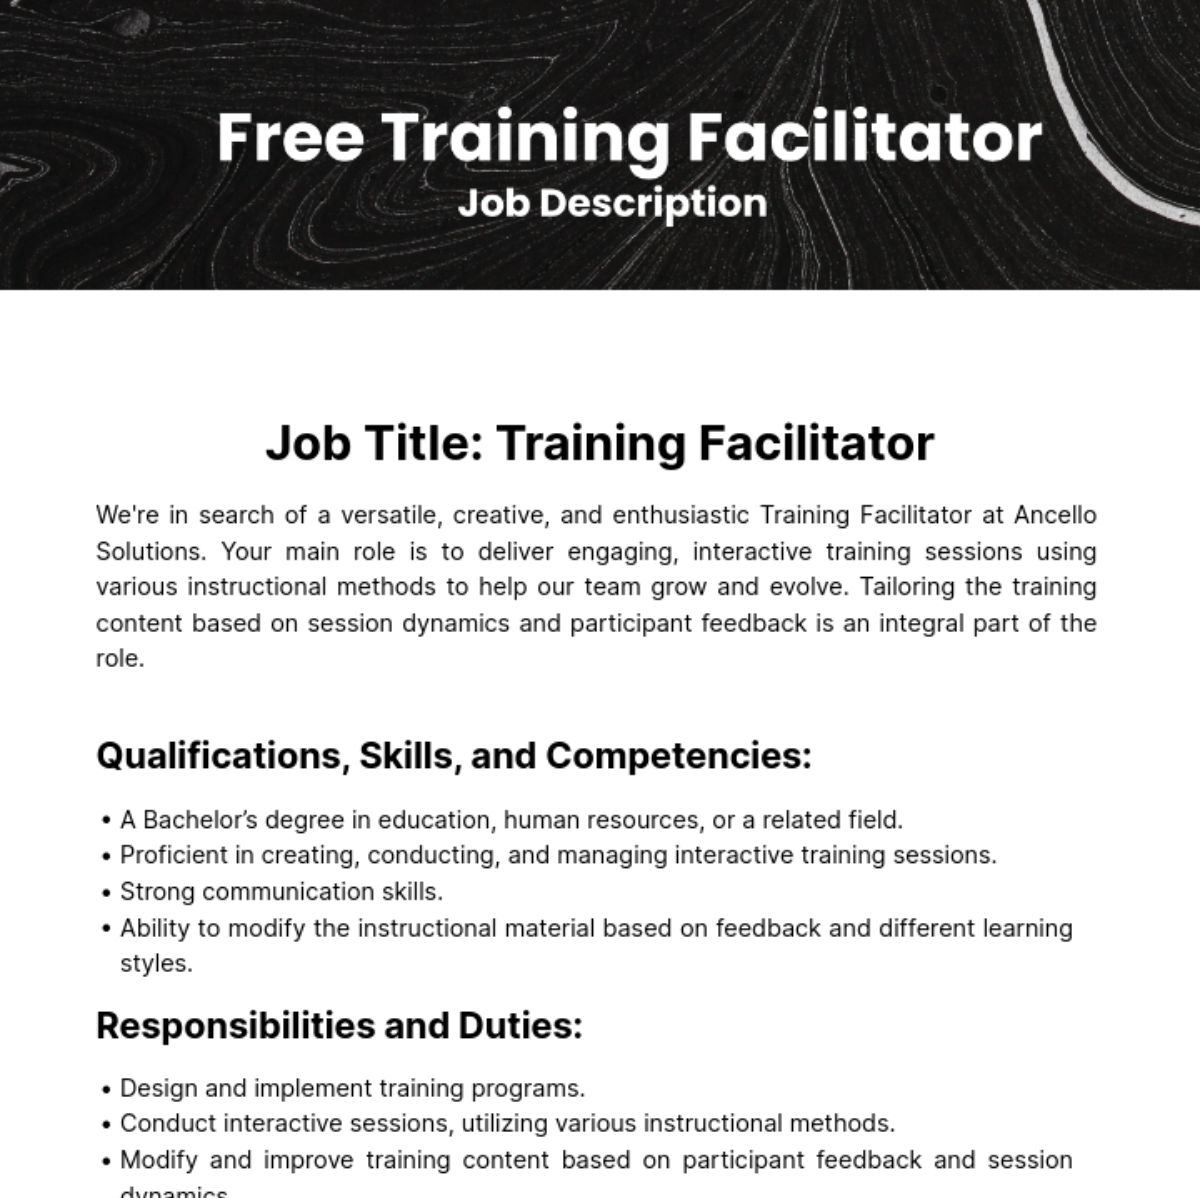 Free Training Facilitator Job Description Template